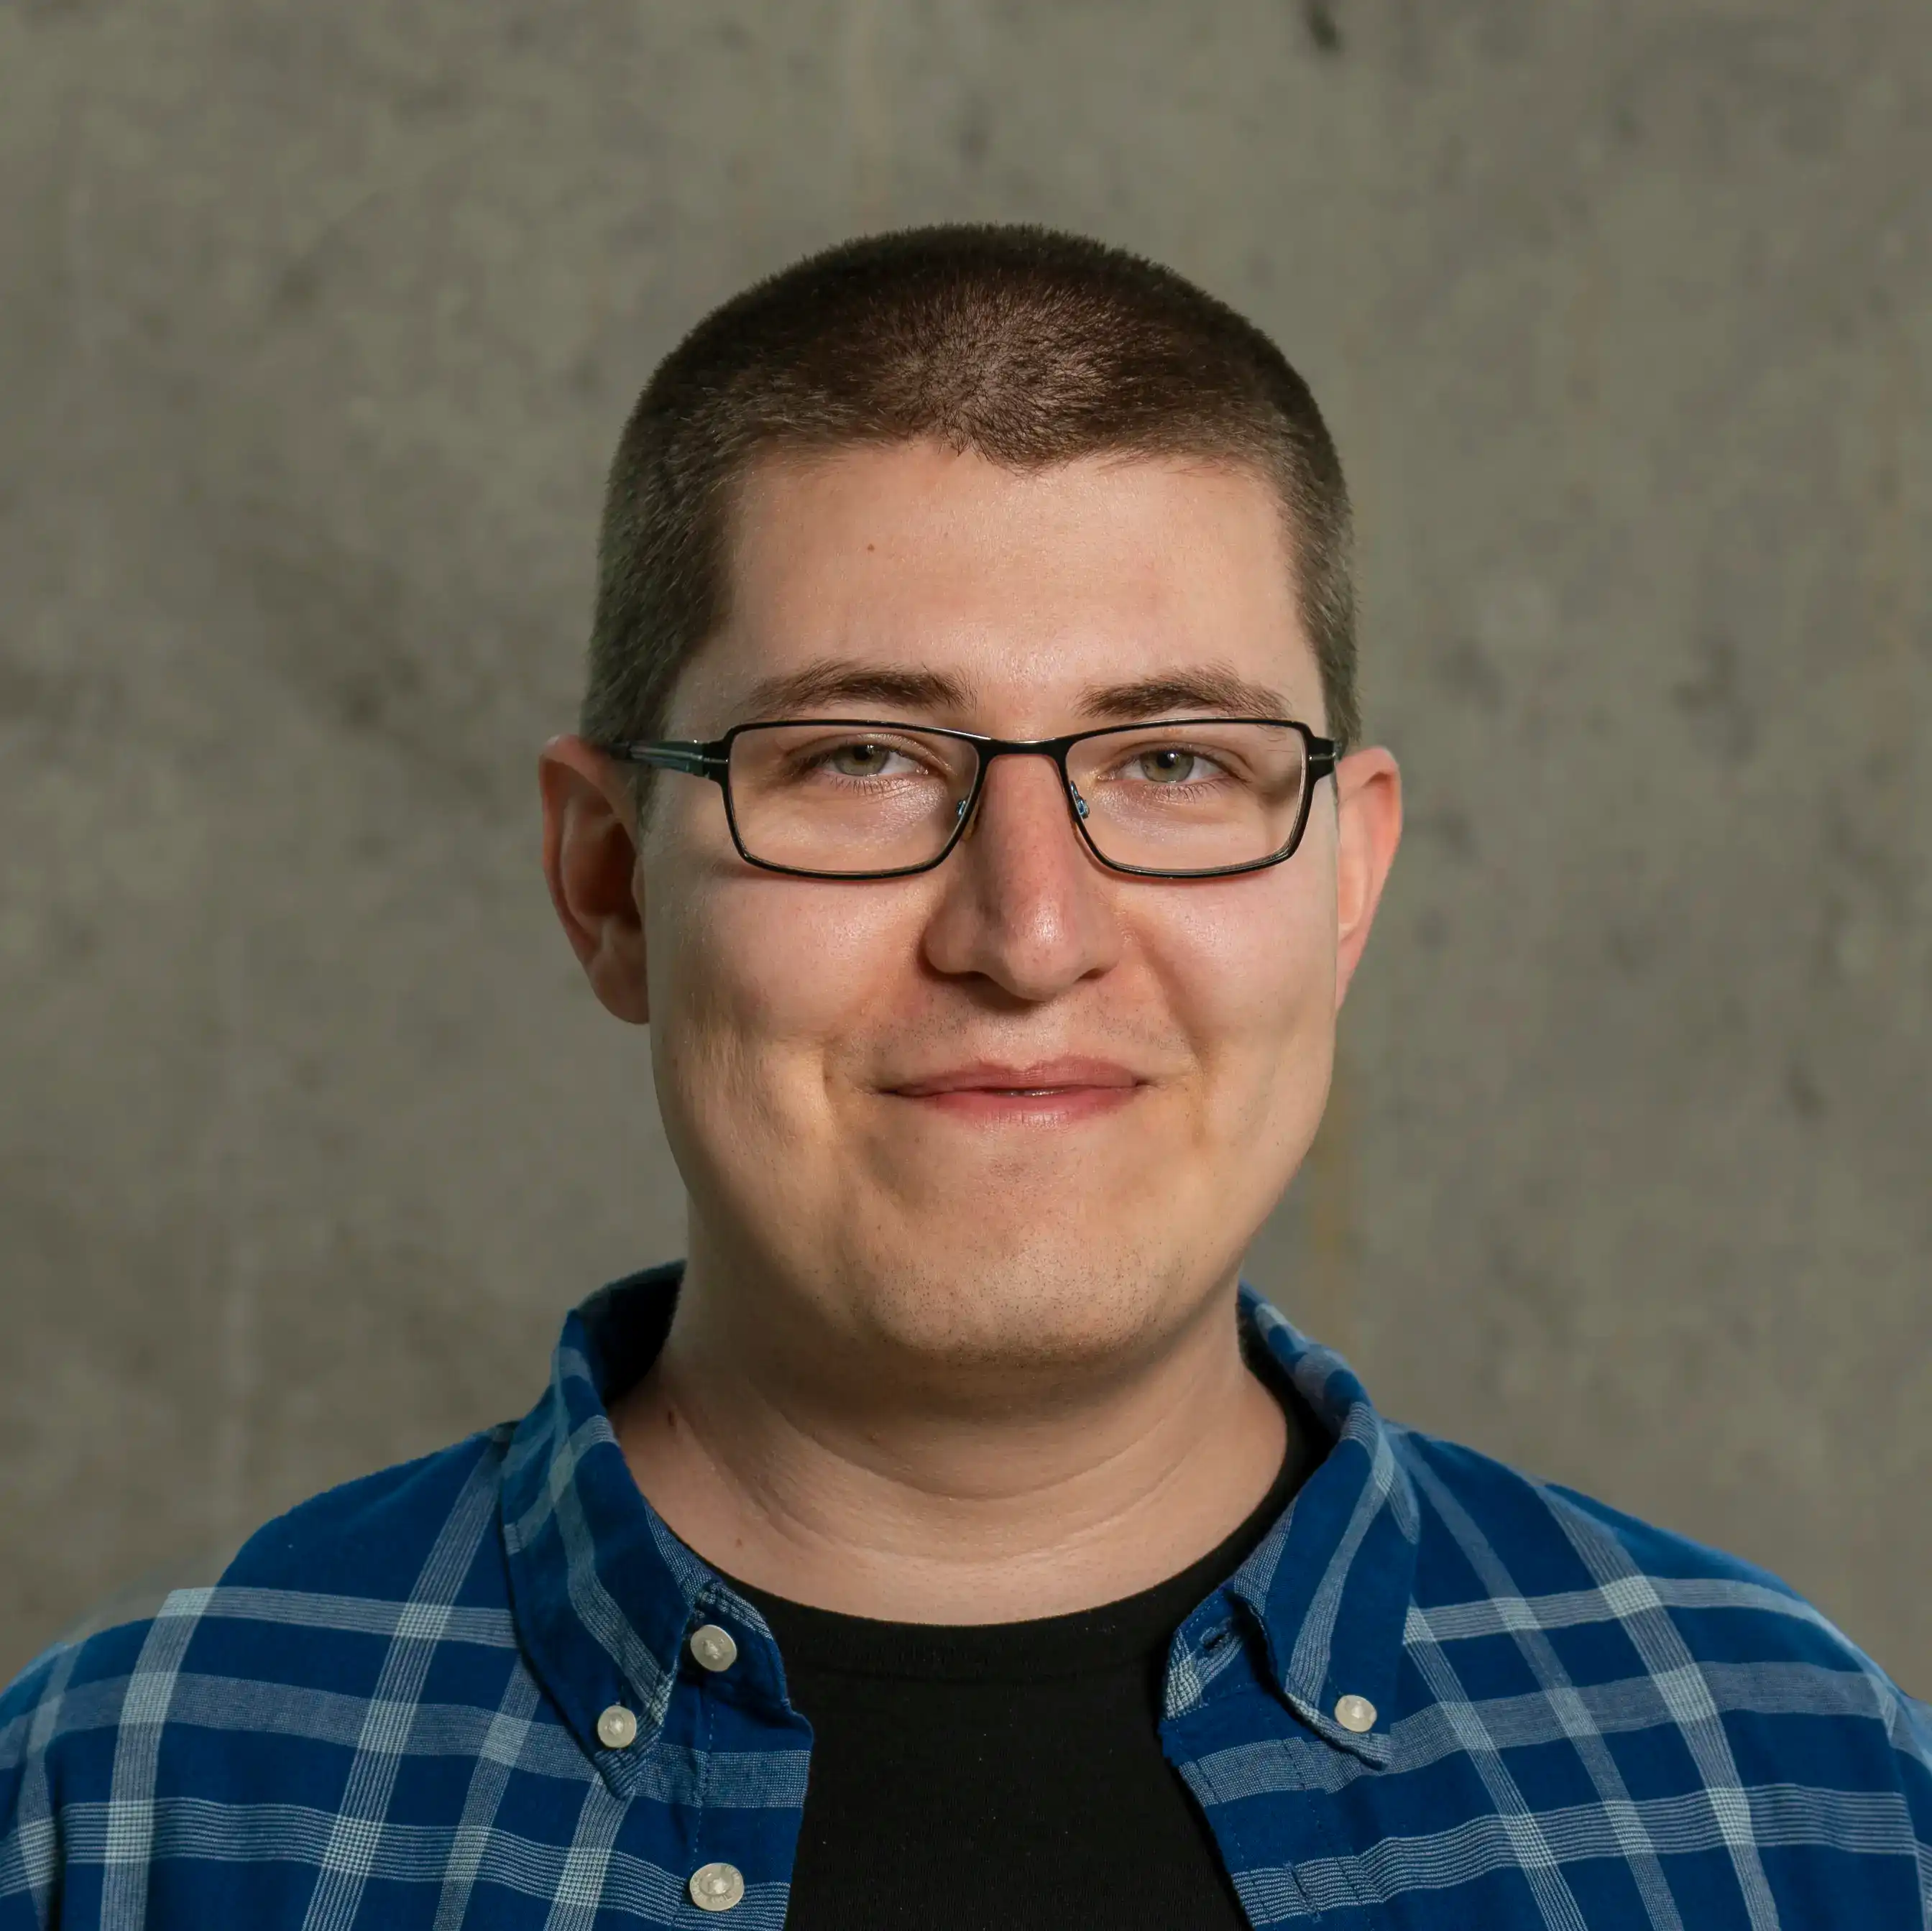 Kacper Kaźmierkiewicz - Modino Software Engineer profile image